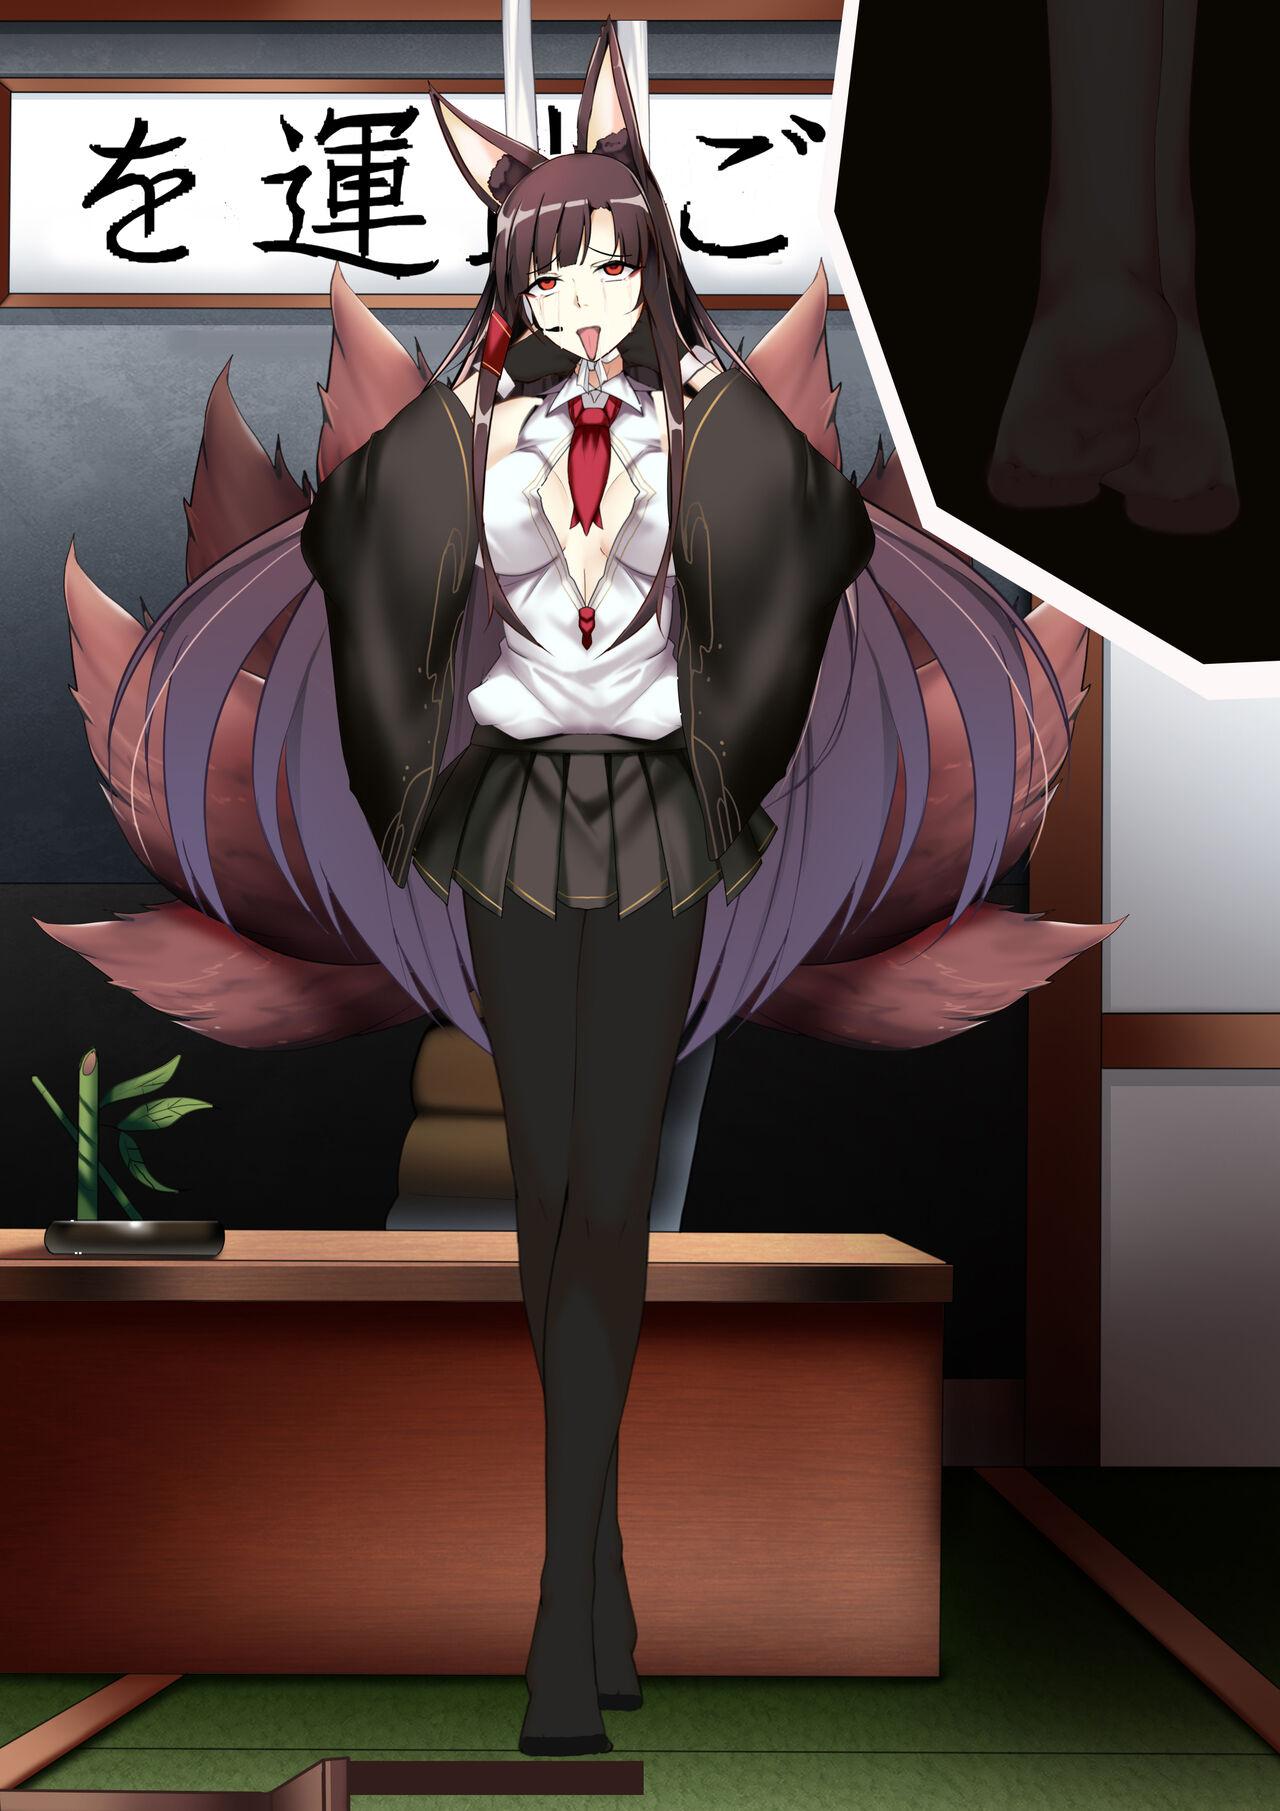 Akagi hanged herself in her office 38